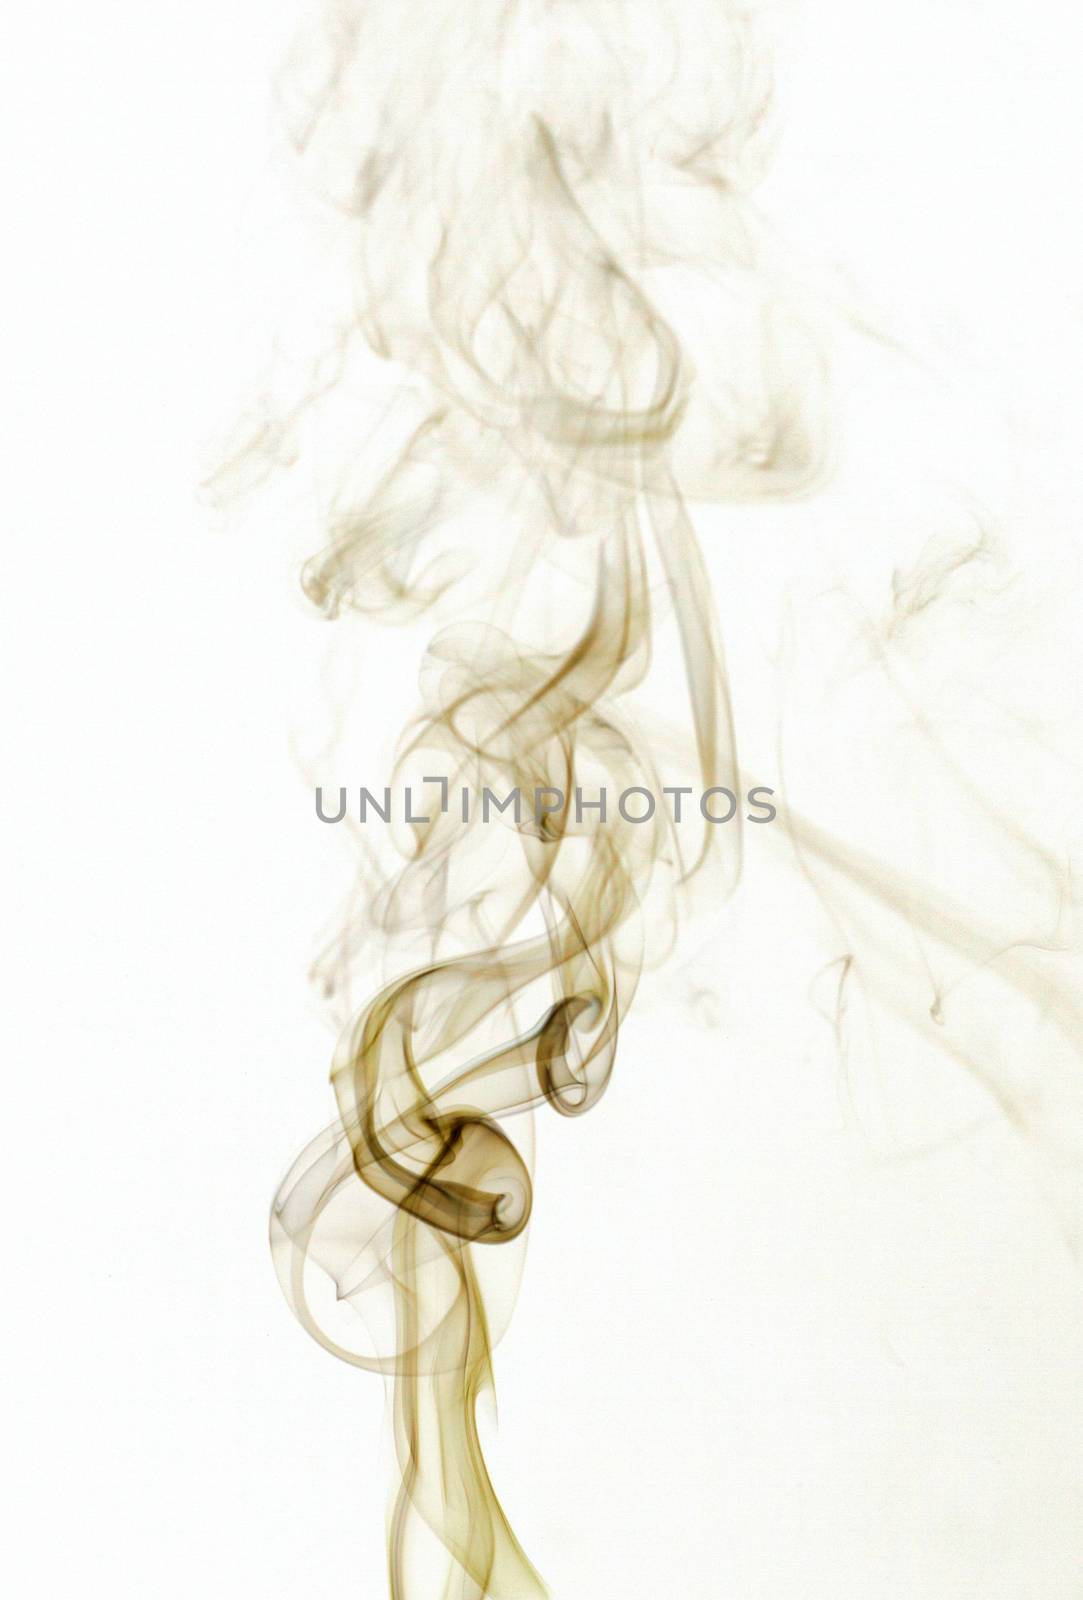 Abstract smoke by Vagengeym